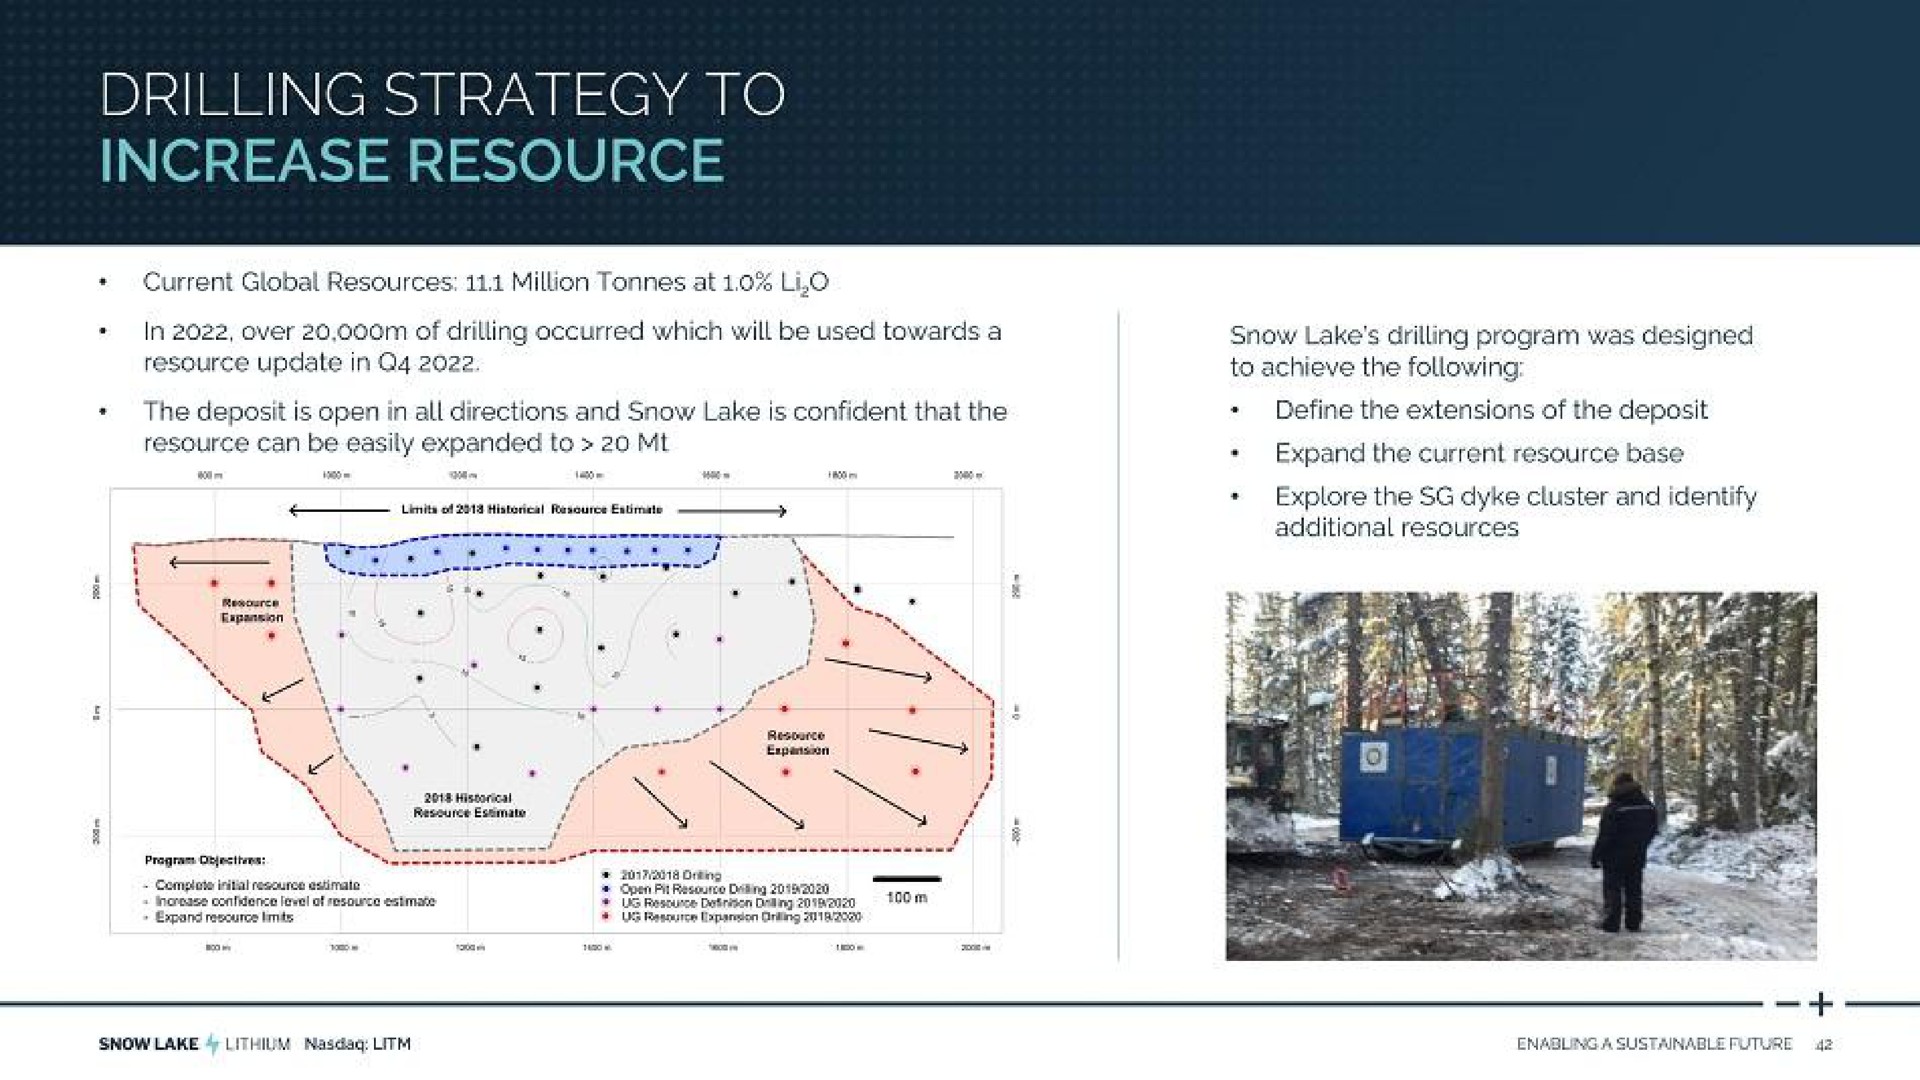 increase resource | Snow Lake Resources